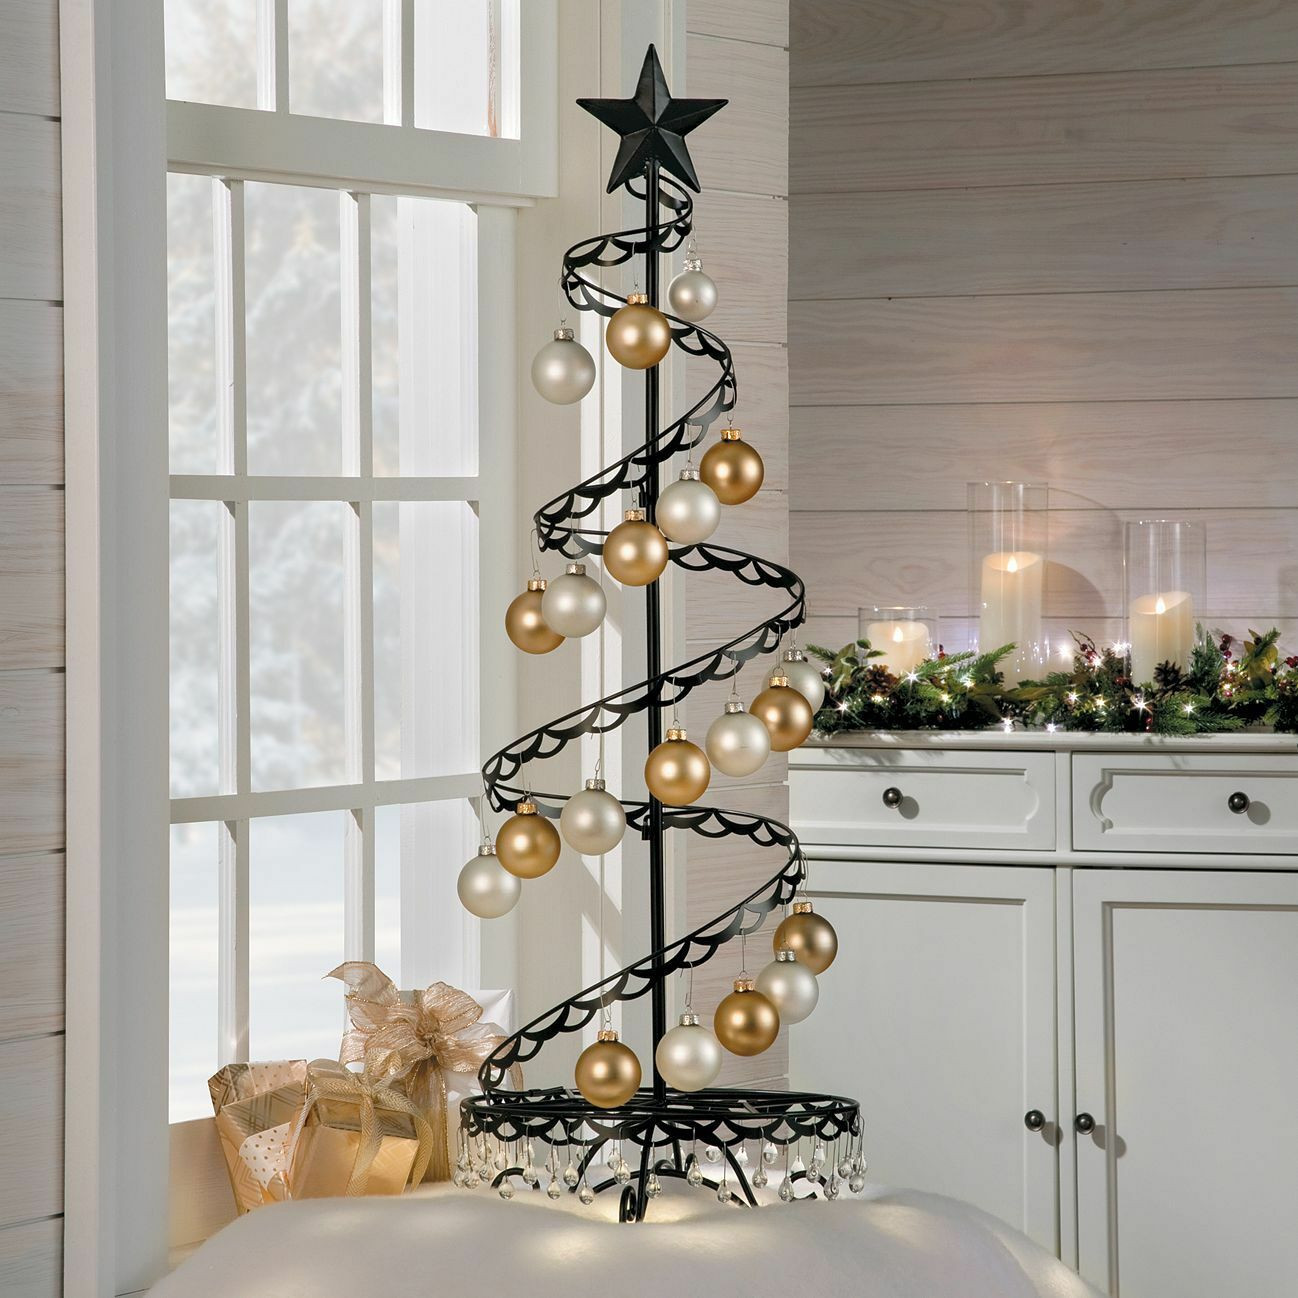 36" Metal Spiral Christmas Ornament Display Trees